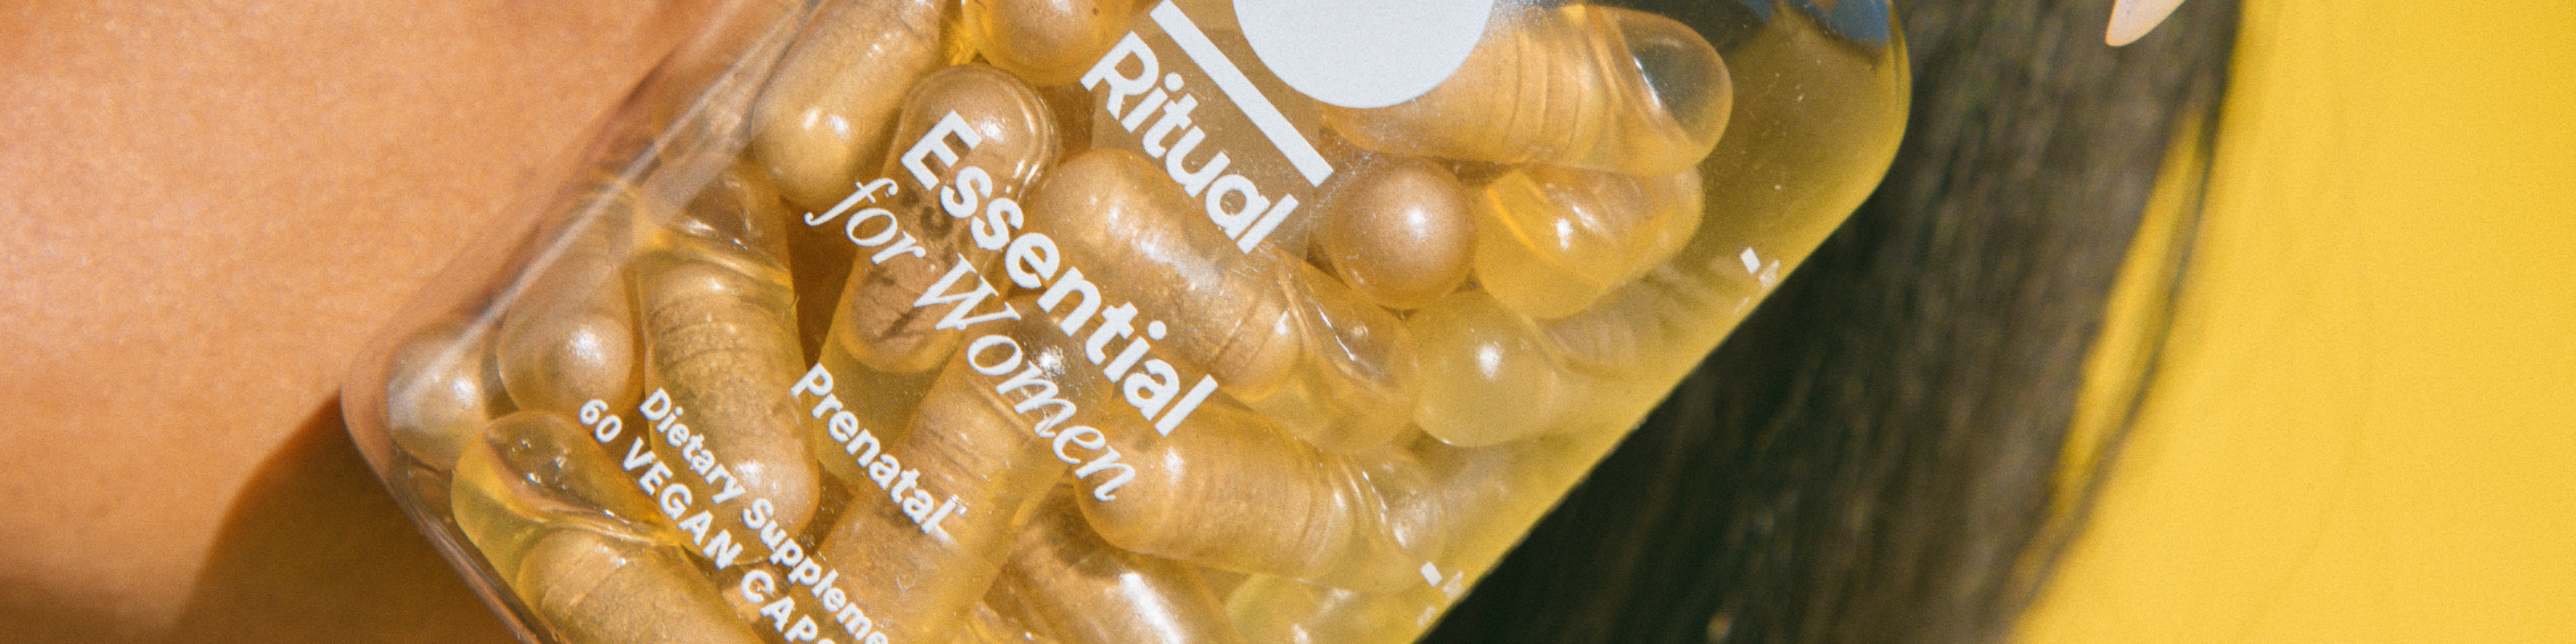 Closeup of an Essential Prenatal multivitamin bottle